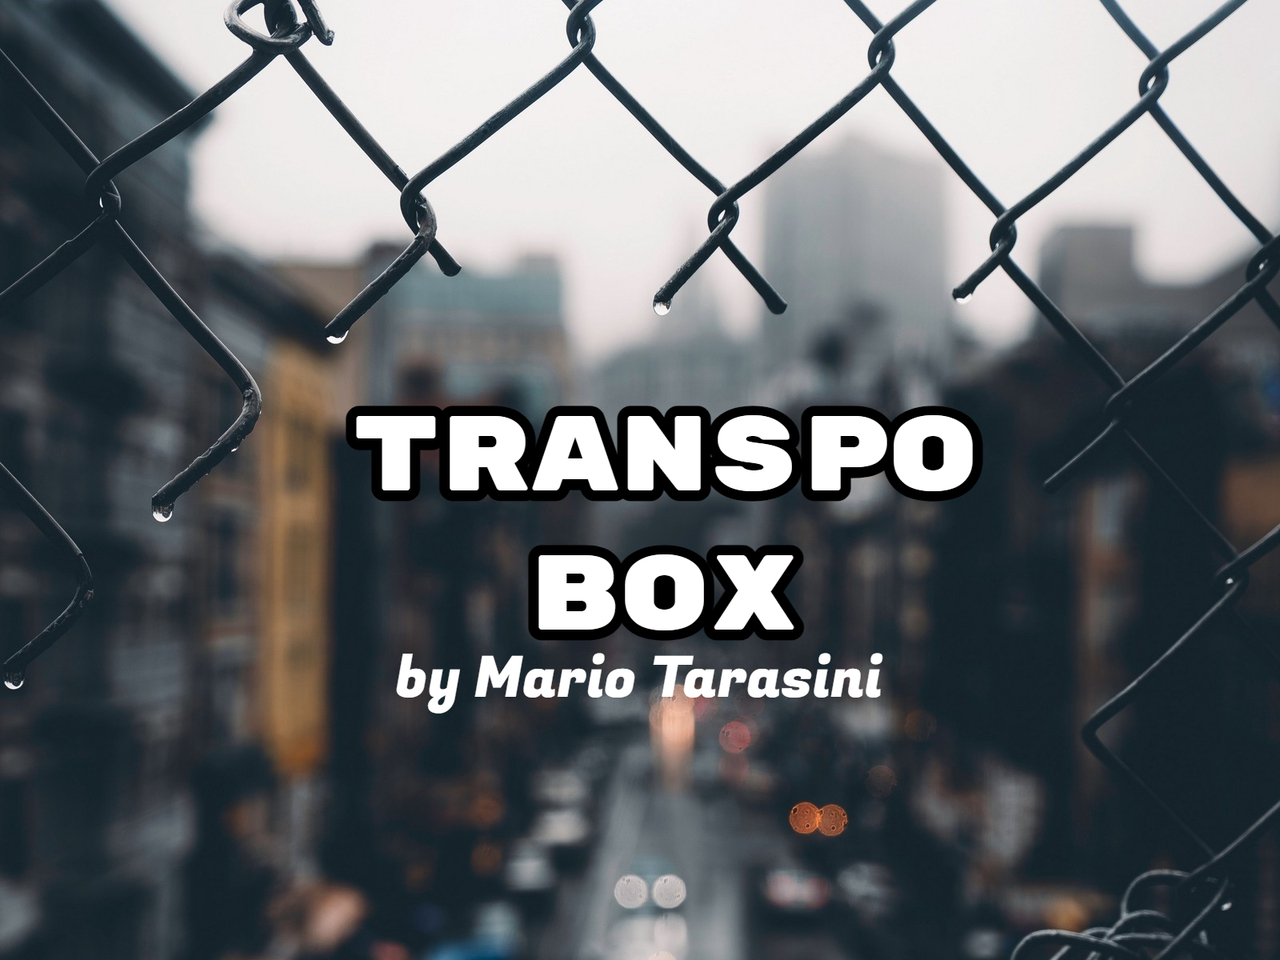 Transpo Box by Mario Tarasini (Mp4 Video Magic Download 1080p FullHD Quality)